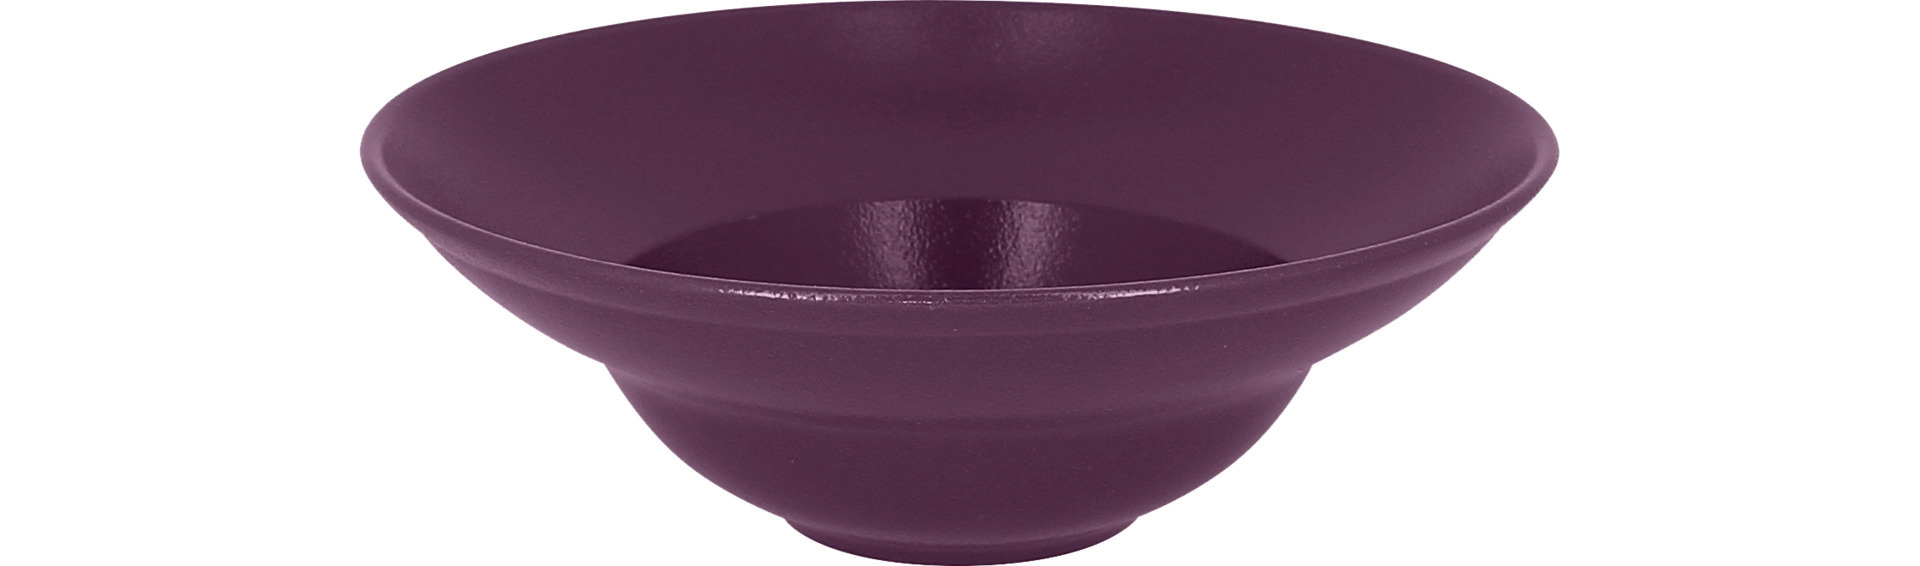 Teller extra tief 230 mm / 0,32 l plum-purple